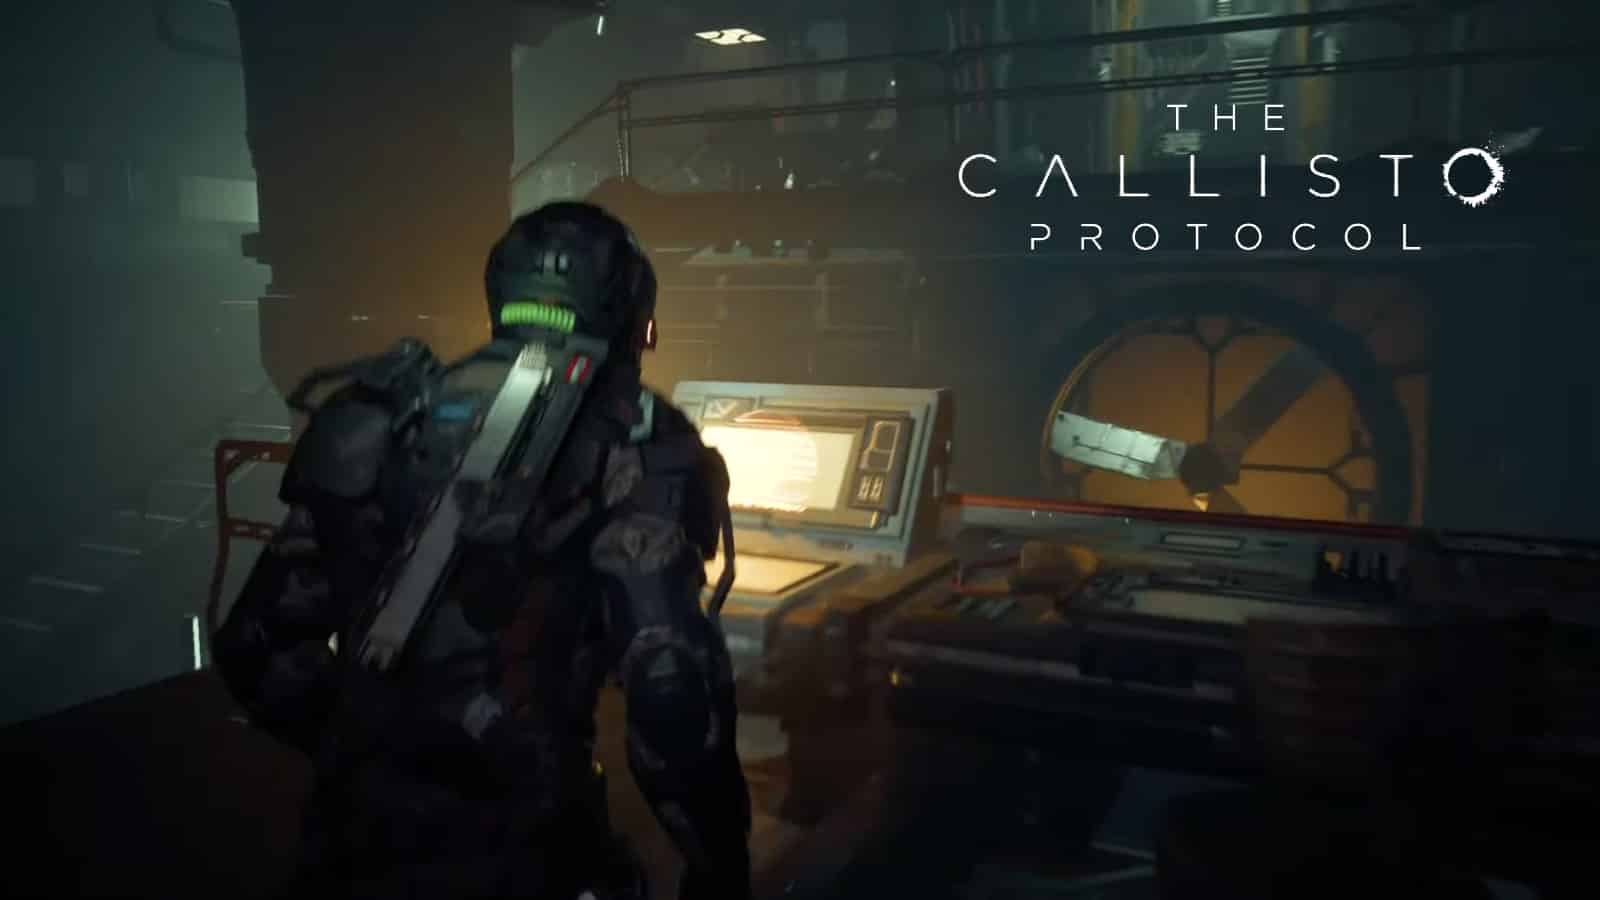 The Callisto Protocol launch trailer revealed